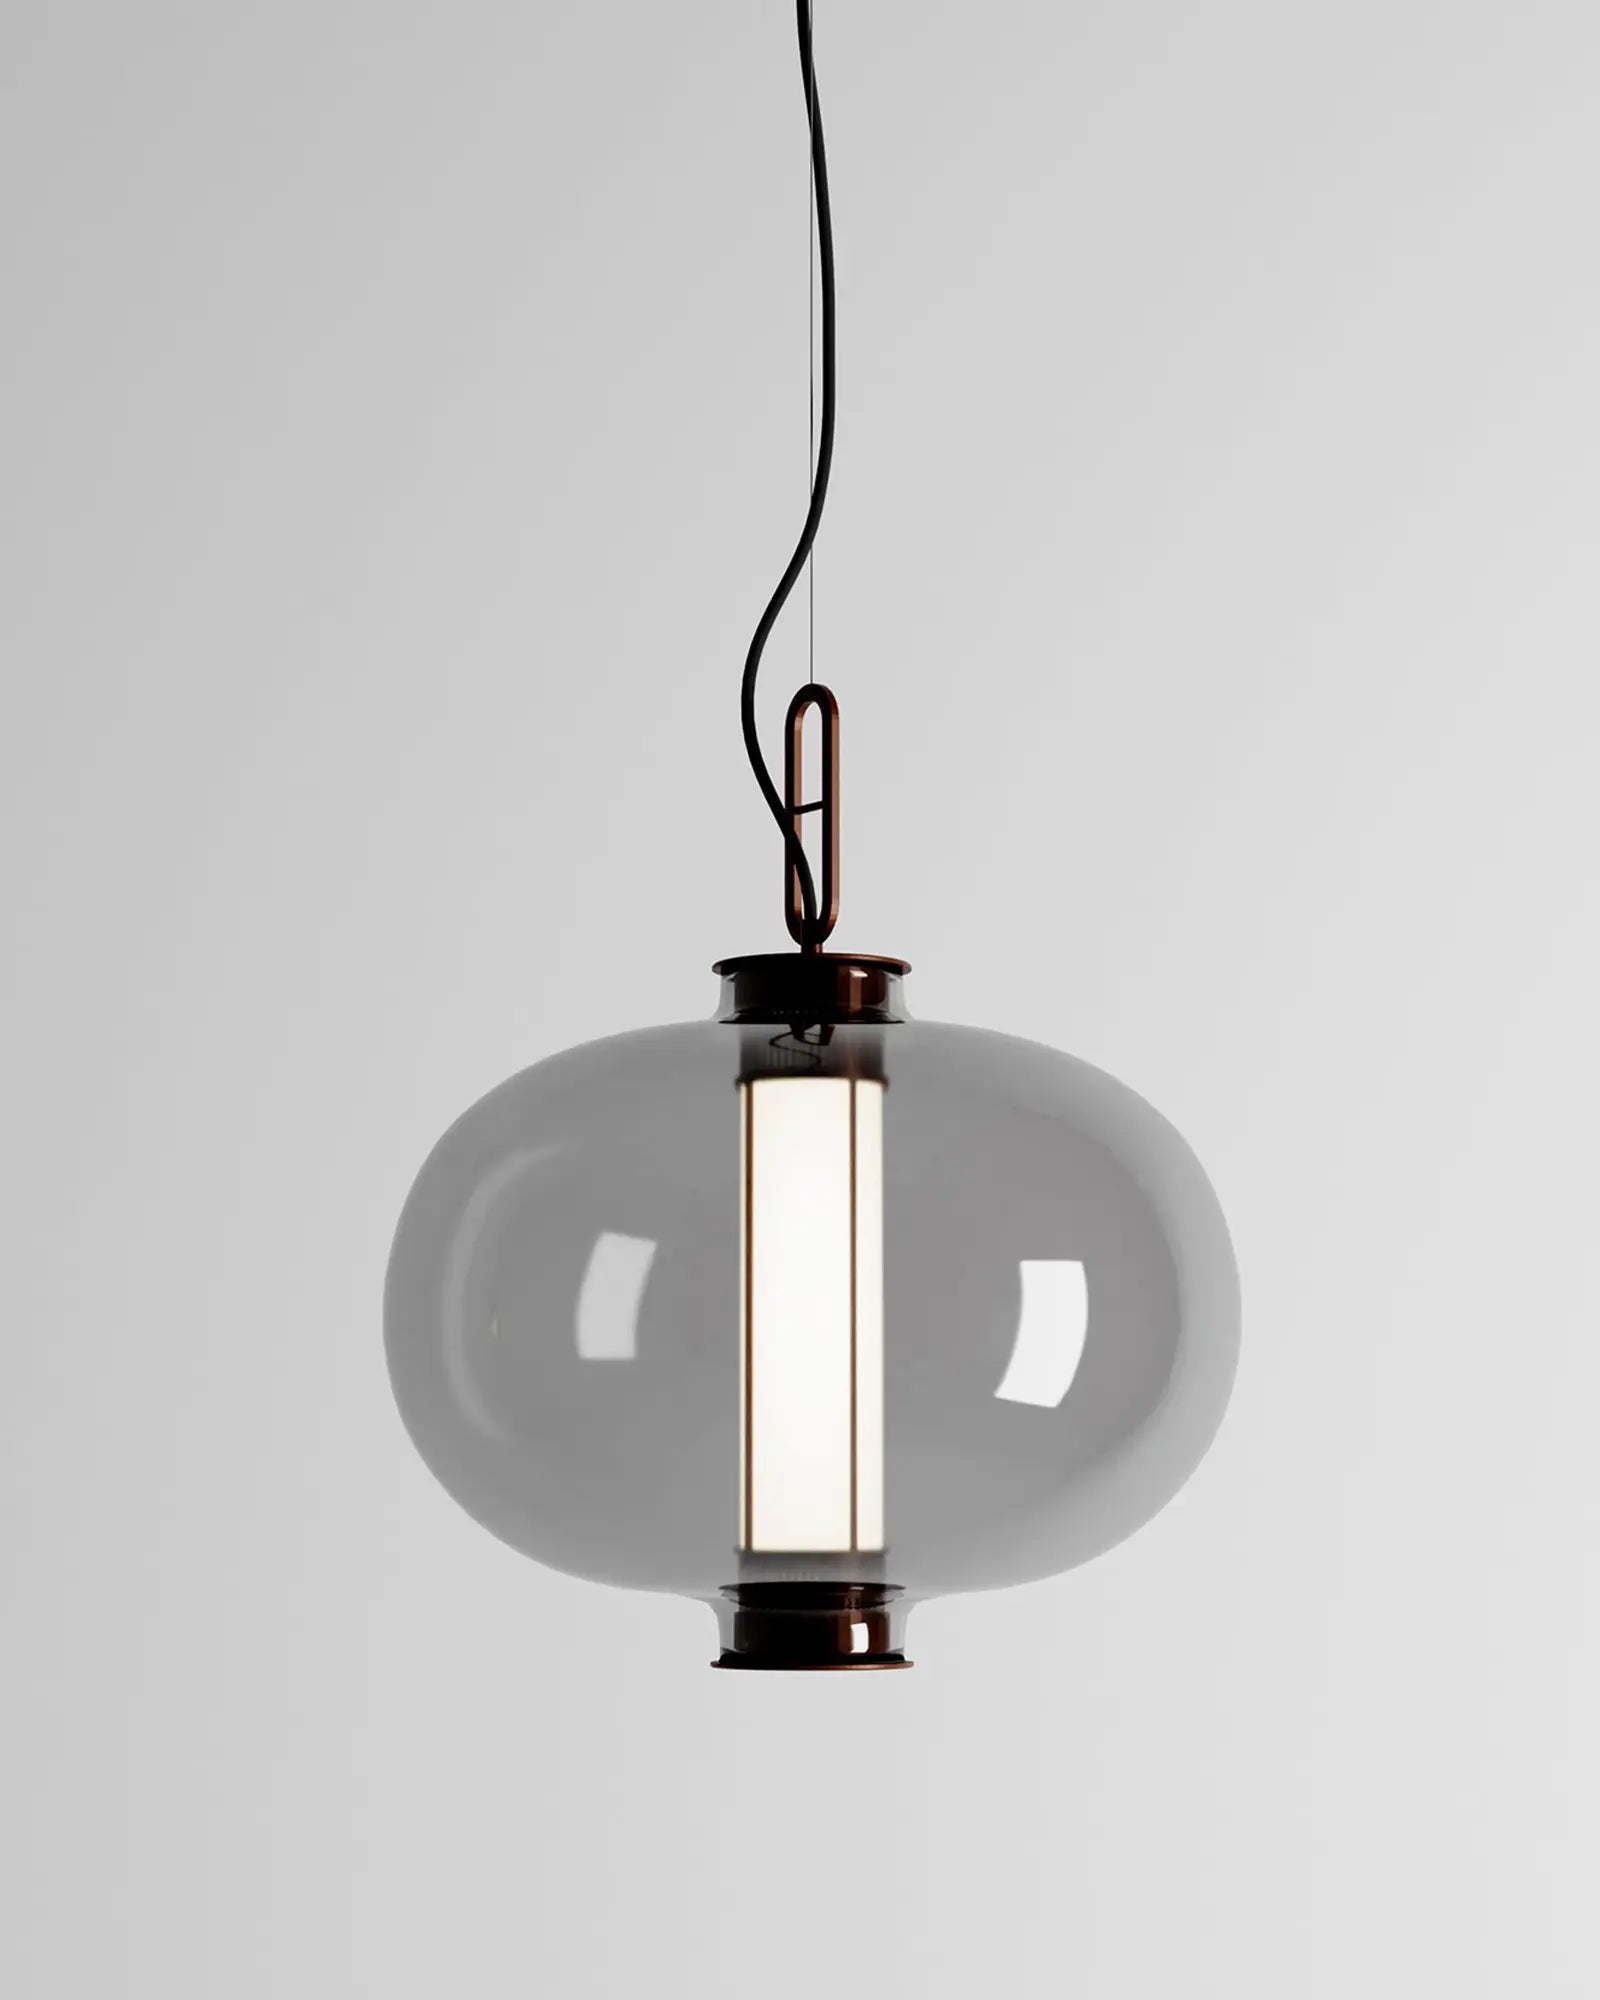 Bai Ma Ma Chinese inspired large lantern style pendant light grey glass